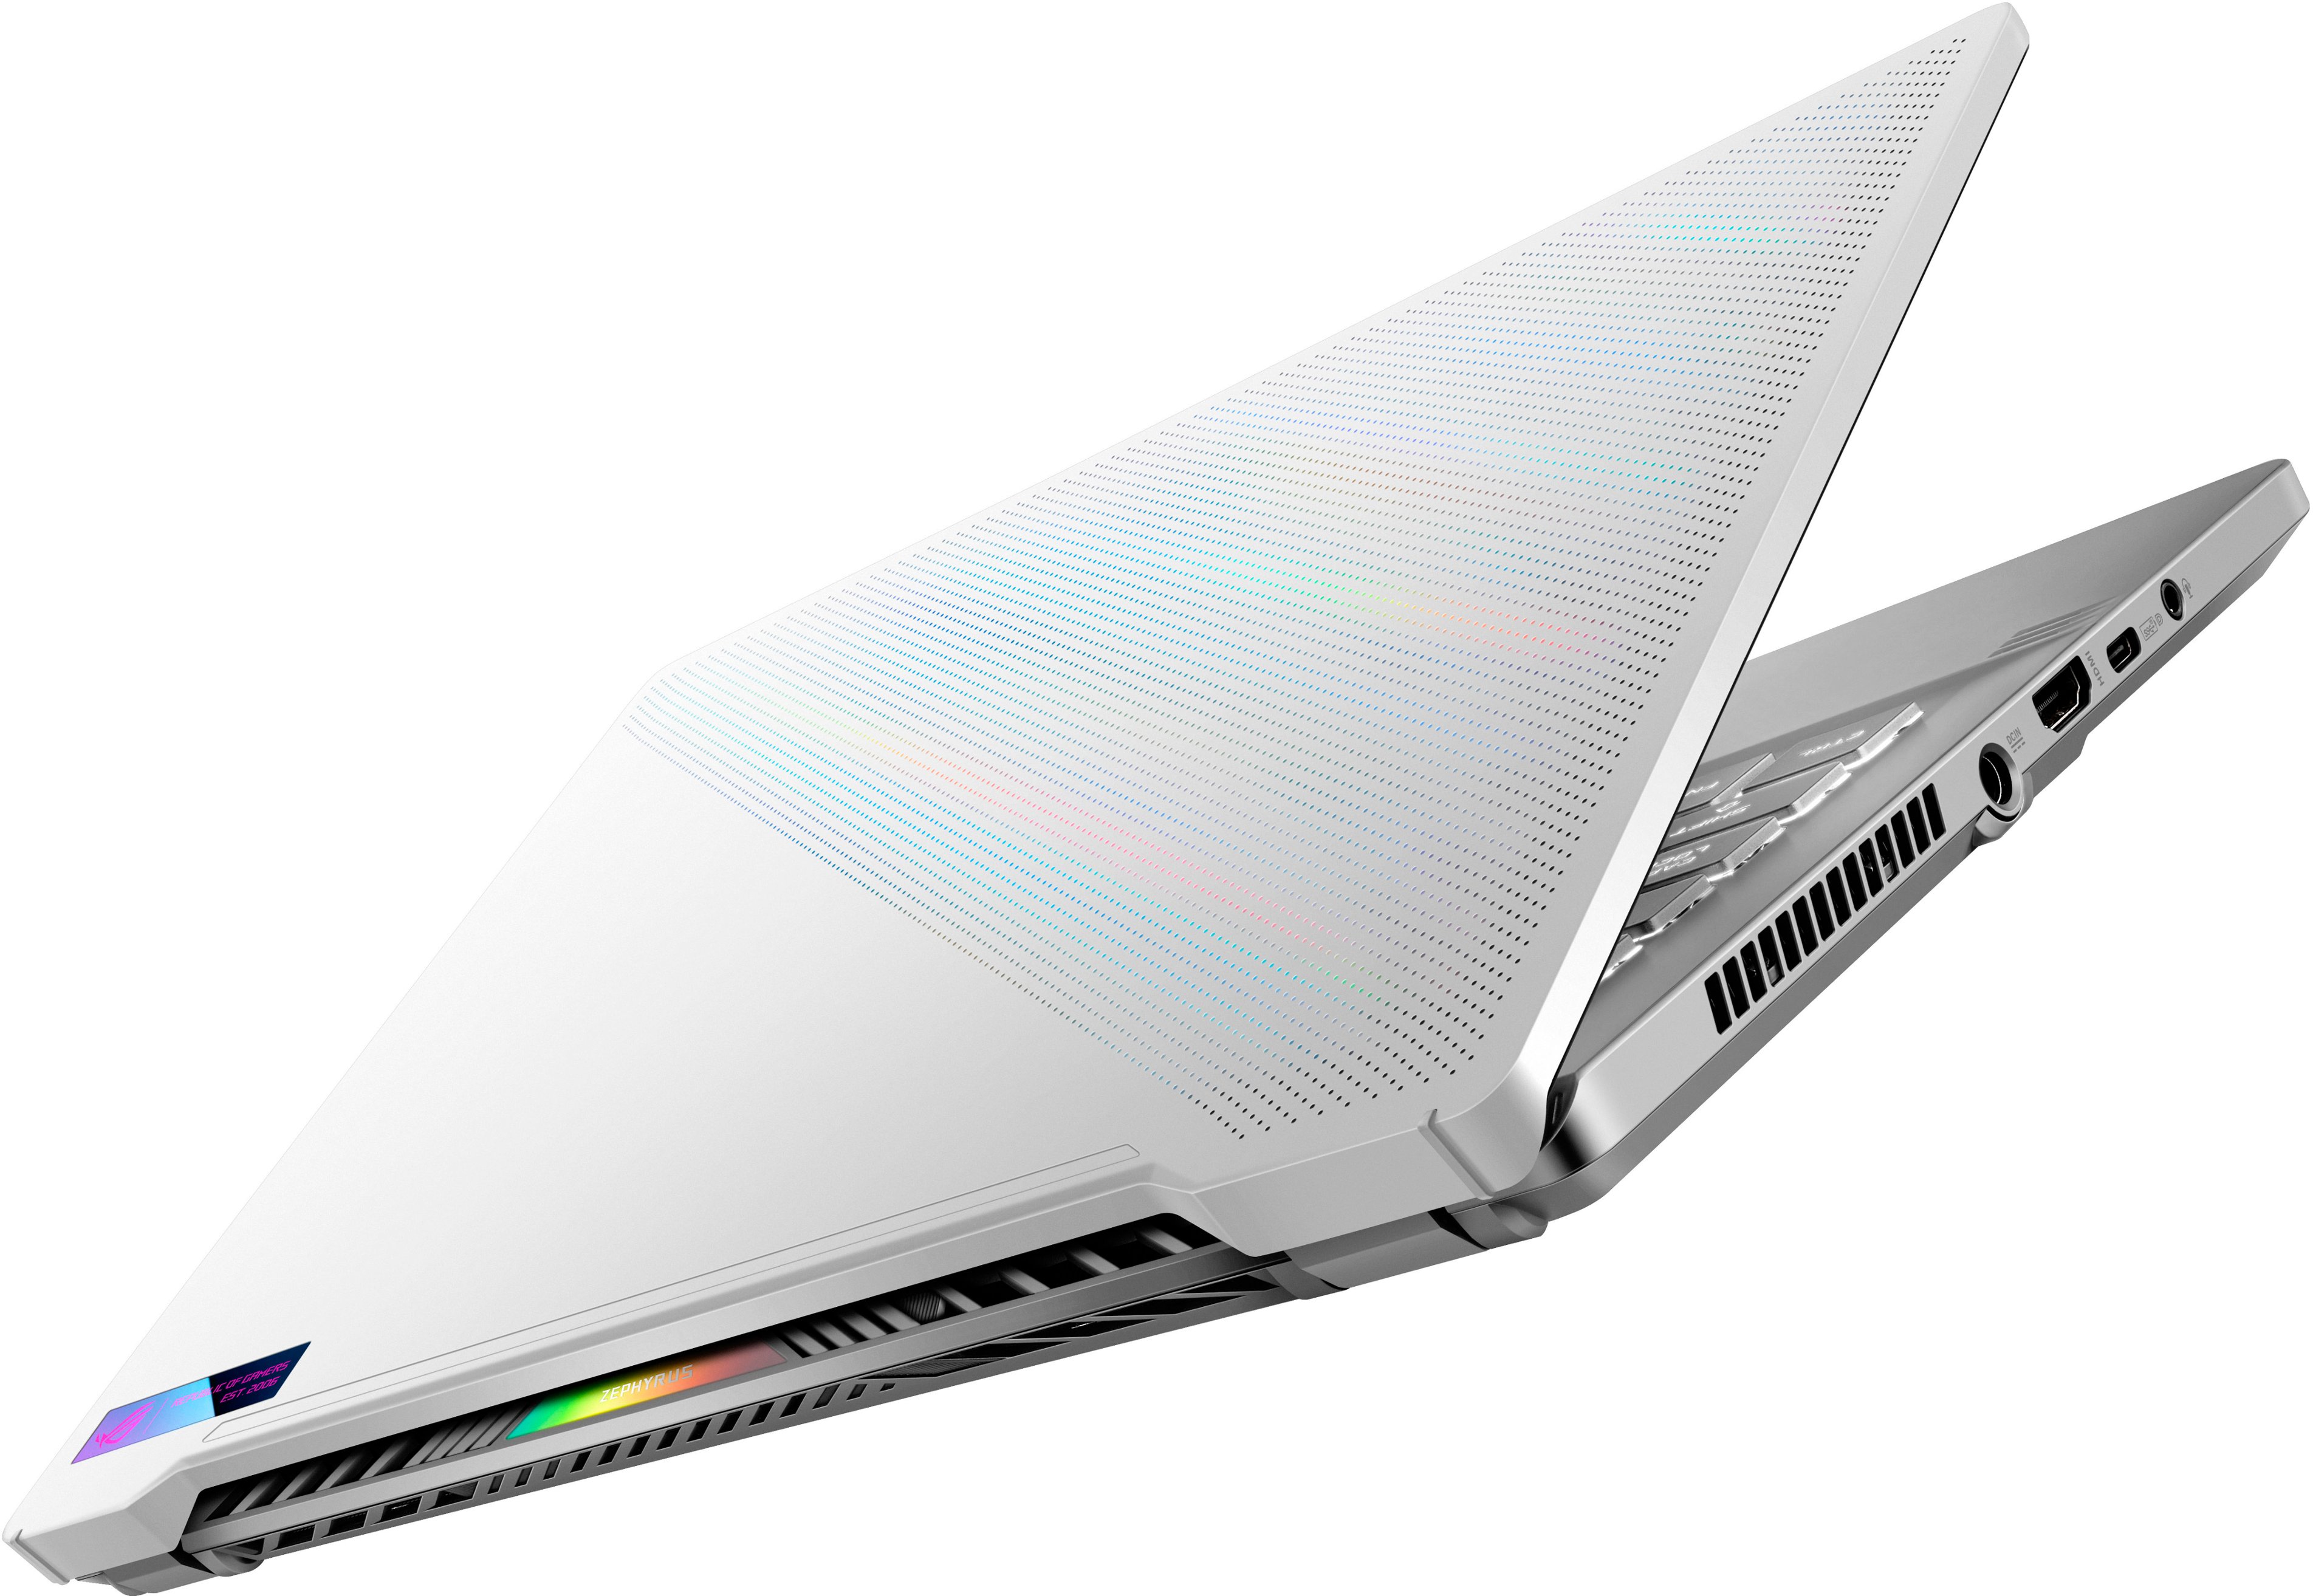 ASUS ROG Zephyrus G14 Gaming Laptop 14 QHD 120Hz IPS, AMD Ryzen 9 5900HS  (Octa-Core, Beat i9-11900H), 40GB RAM, 1TB PCIe SSD, GeForce RTX 3060